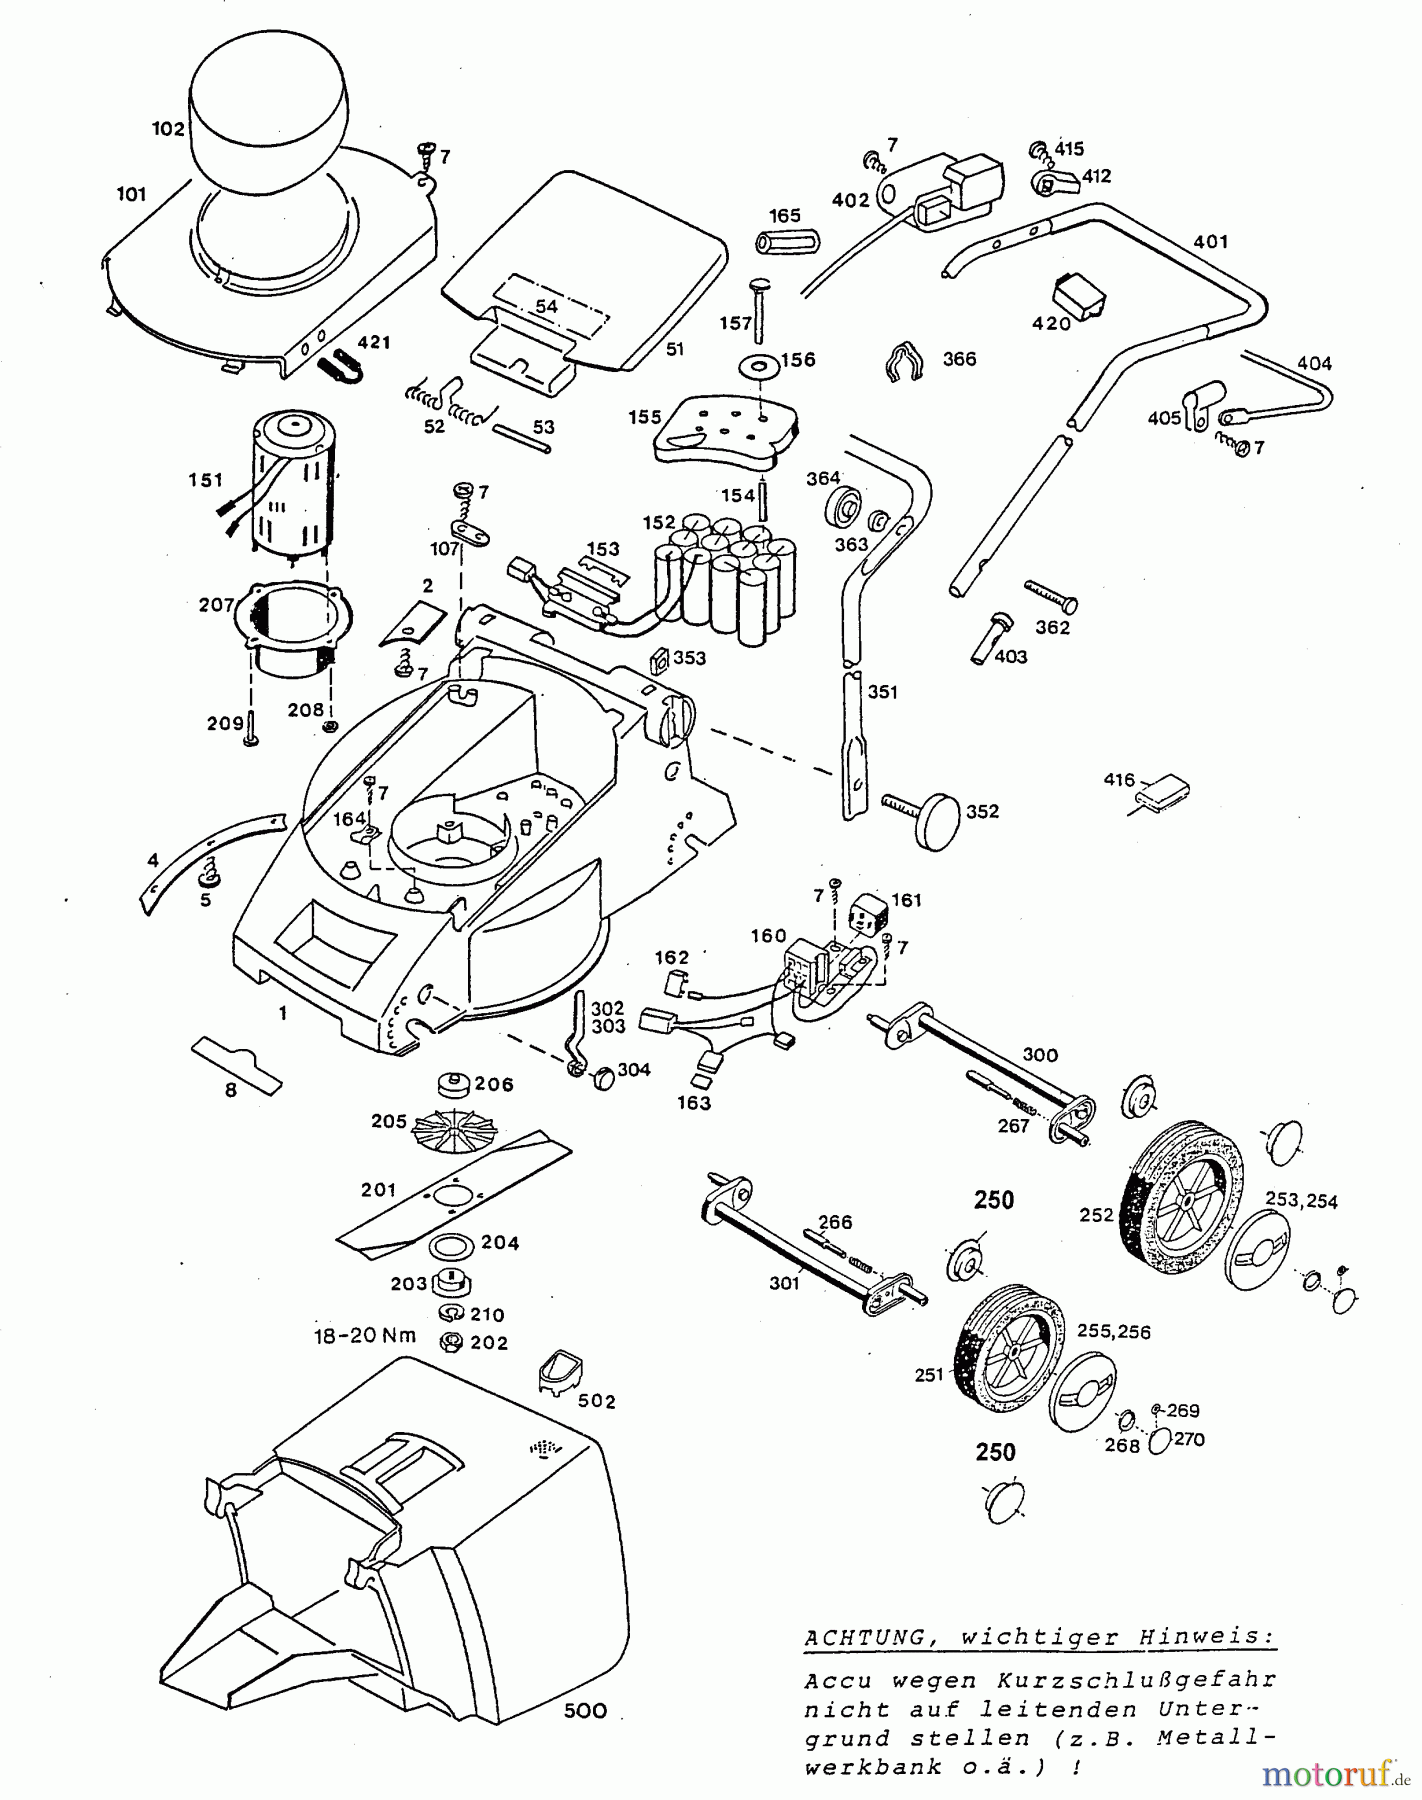  Wolf-Garten Battery mower 6.32 Accu 4933000 Series C  (1996) Basic machine